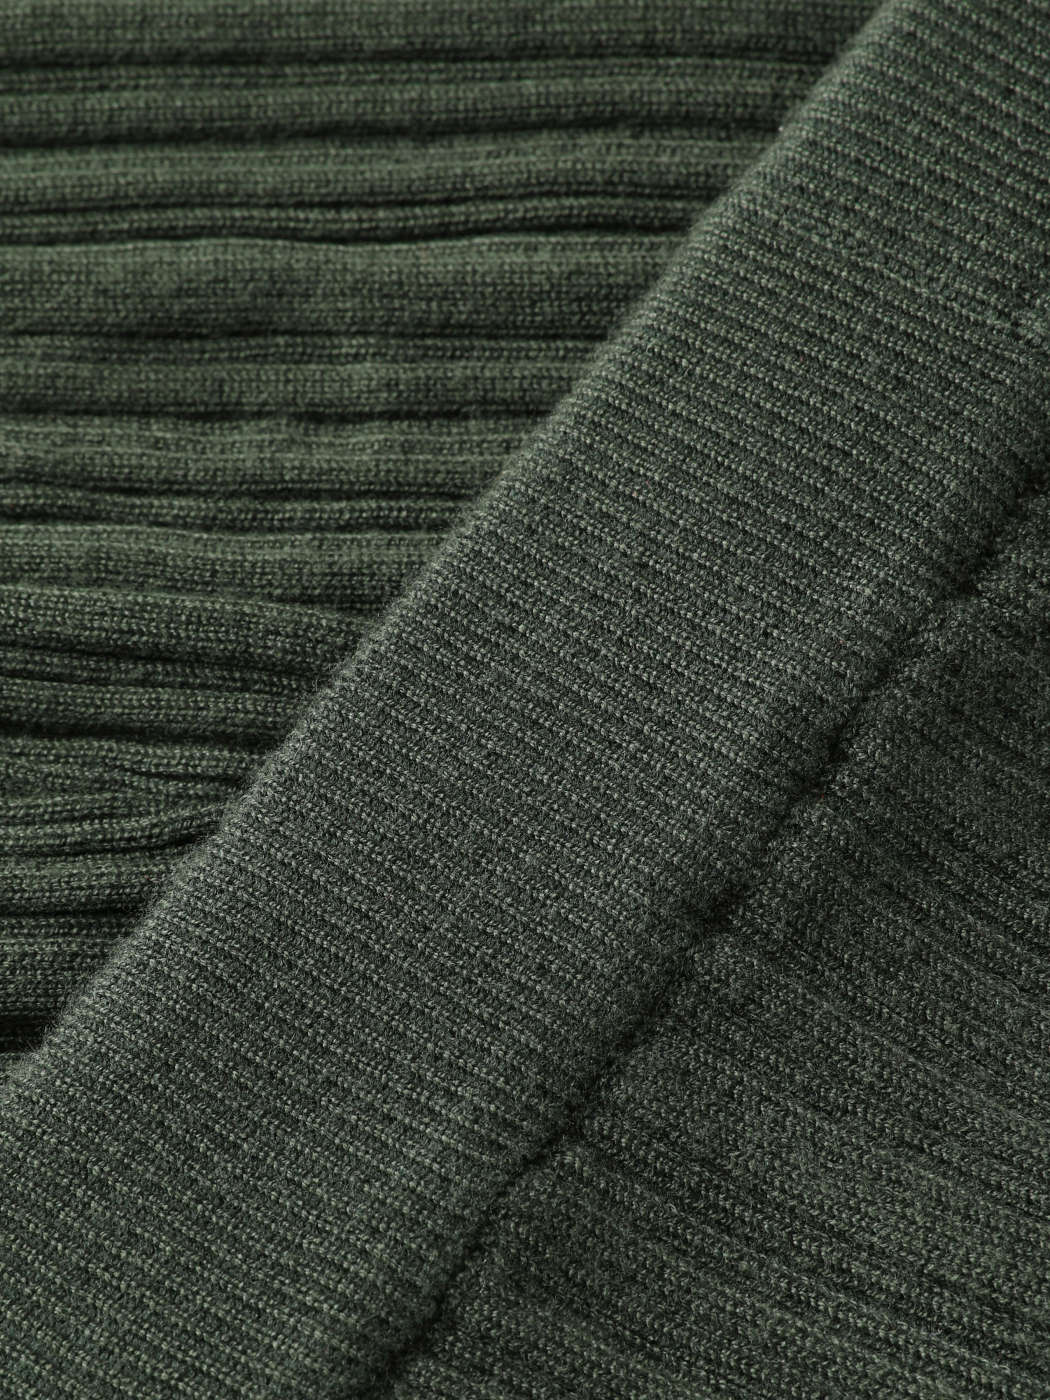 Khaki Green Knitted Corset Top